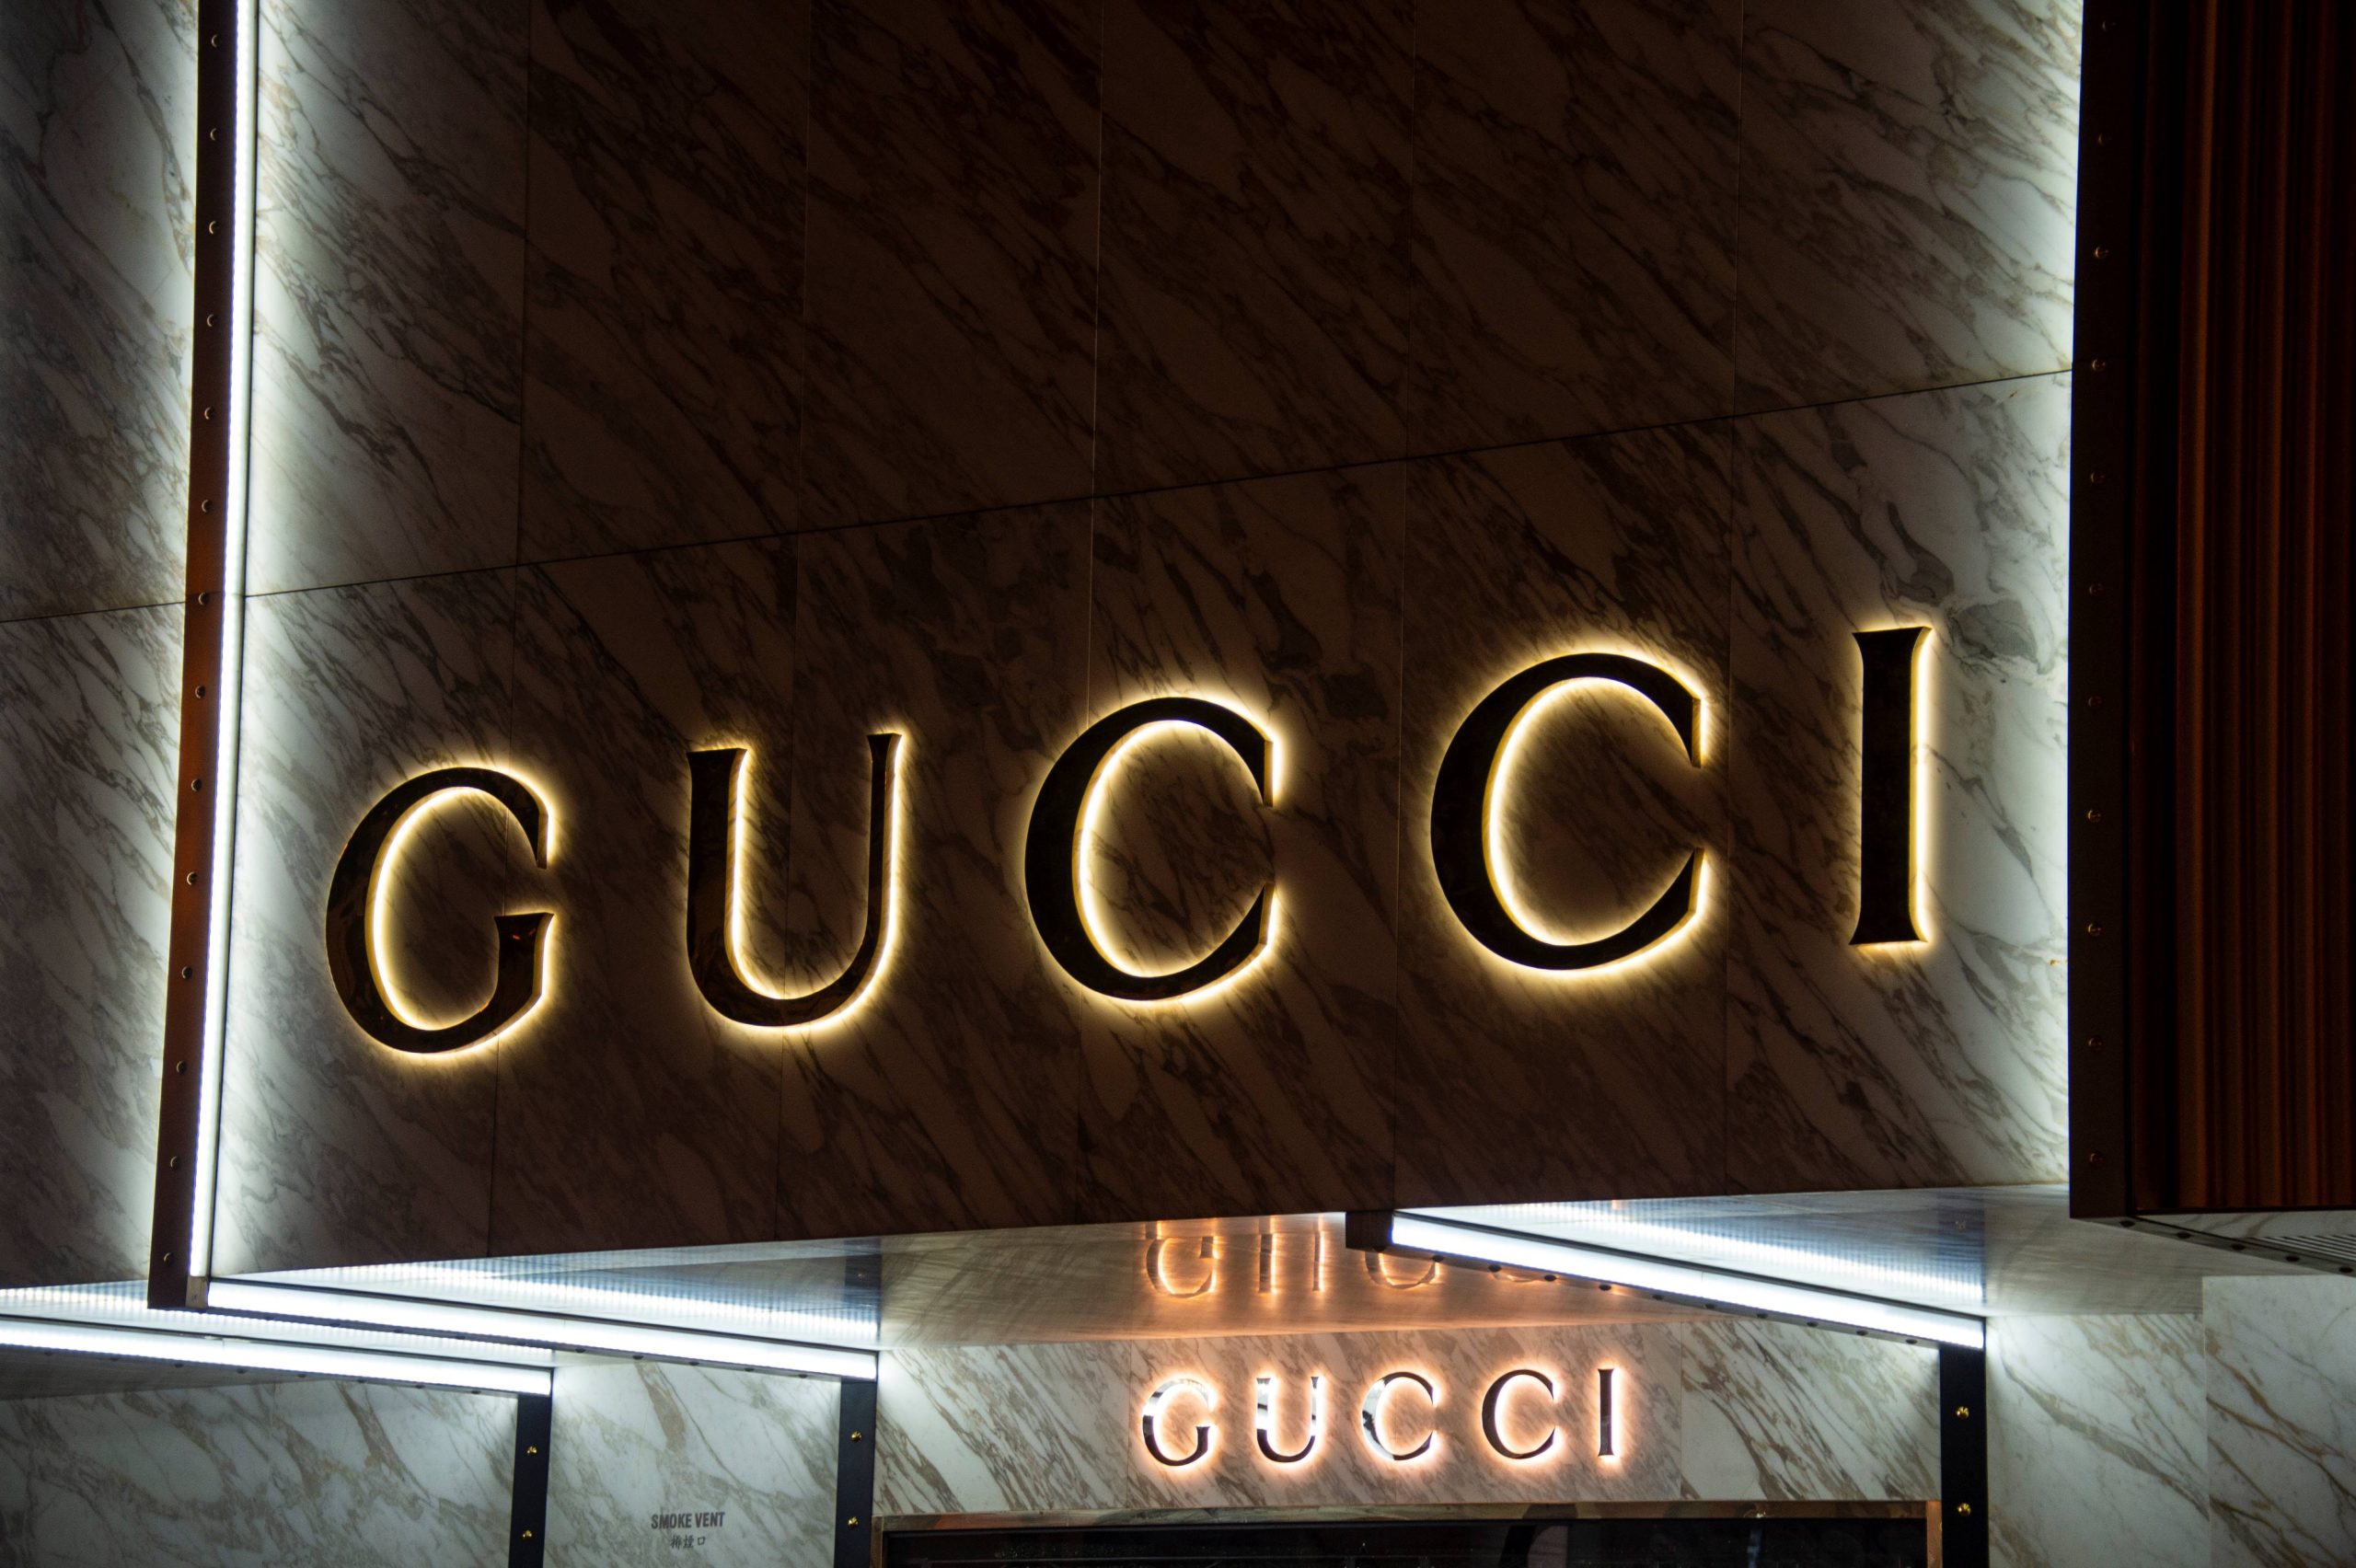 Gucci – A Brand of Grace